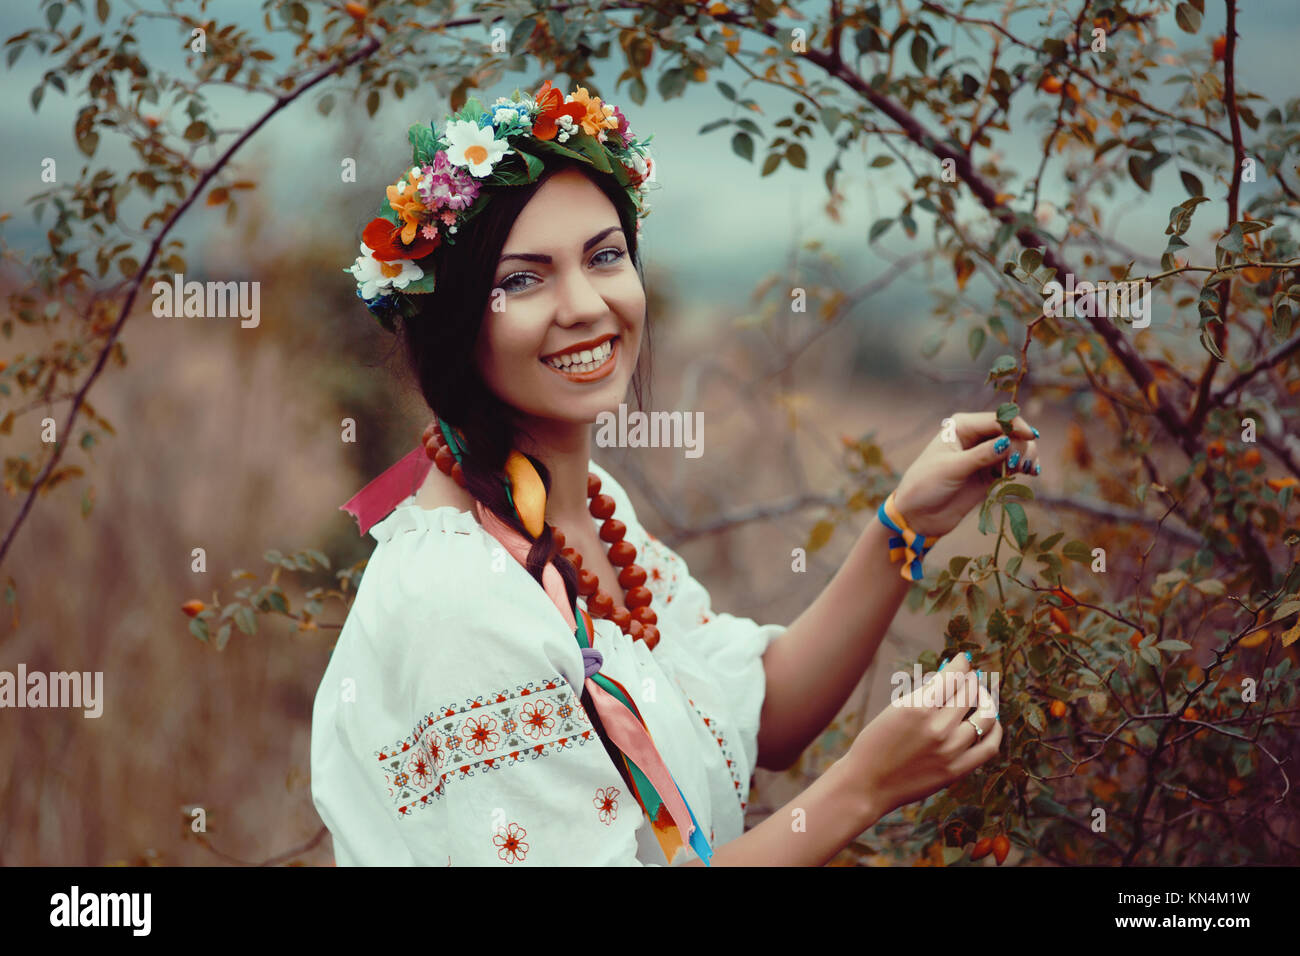 https://c8.alamy.com/comp/KN4M1W/beautiful-woman-in-colorful-ukrainian-traditional-dress-holding-herself-KN4M1W.jpg